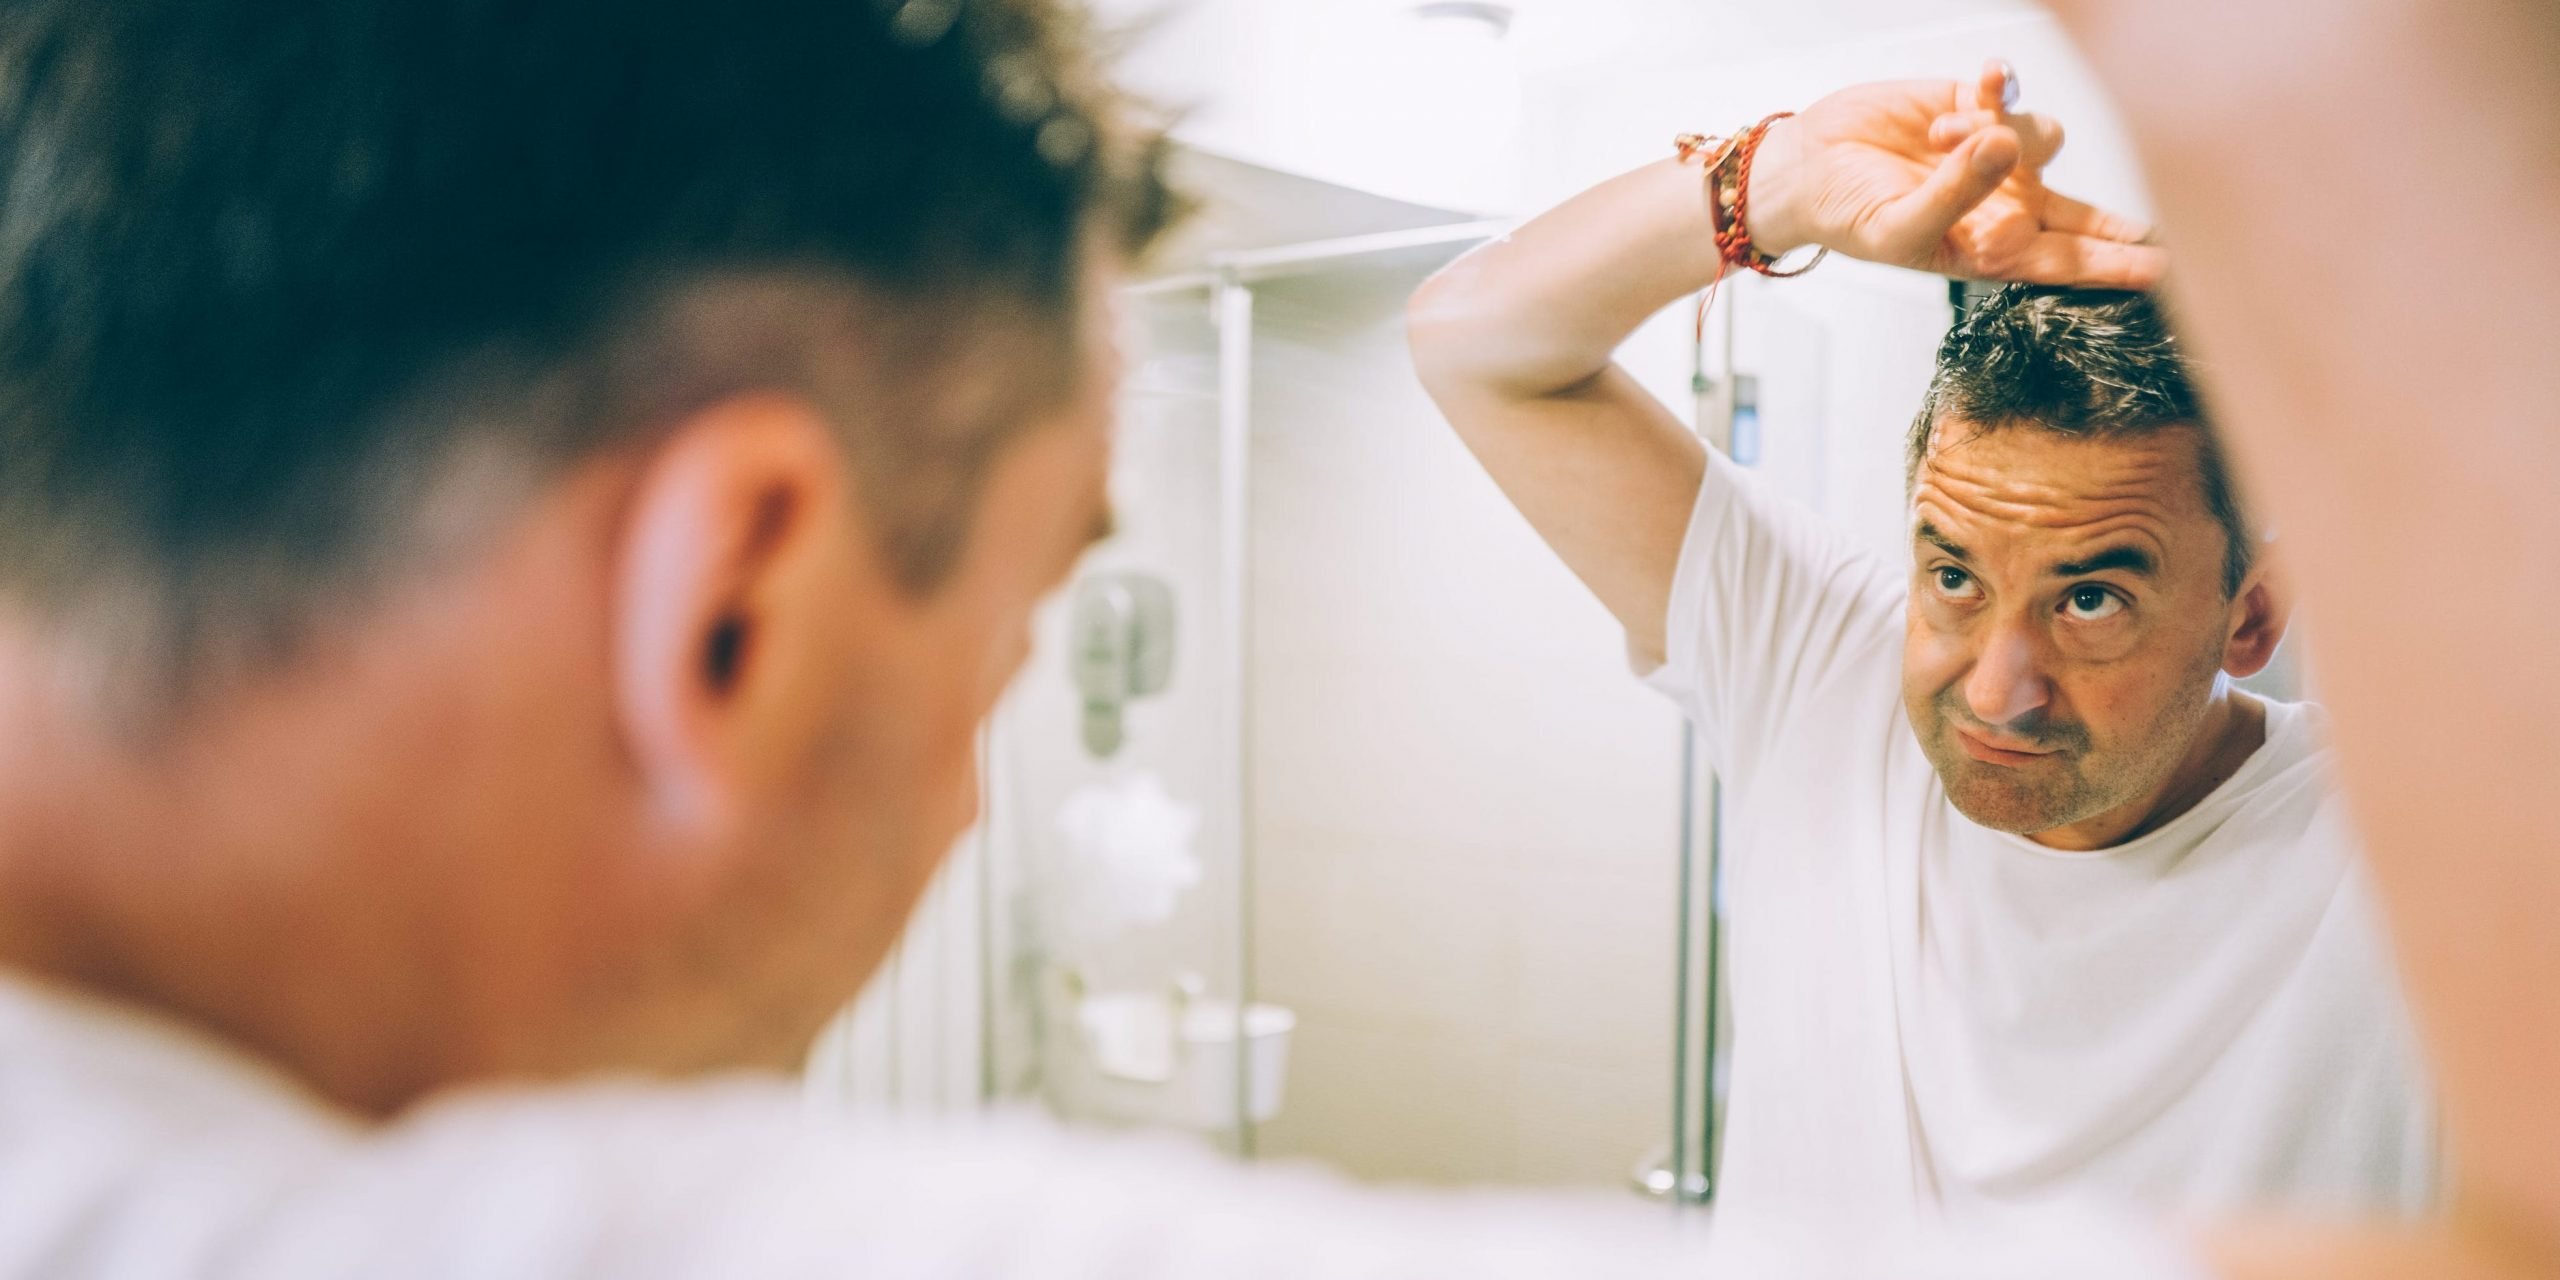 A middle-aged man checks his hair in a mirror.